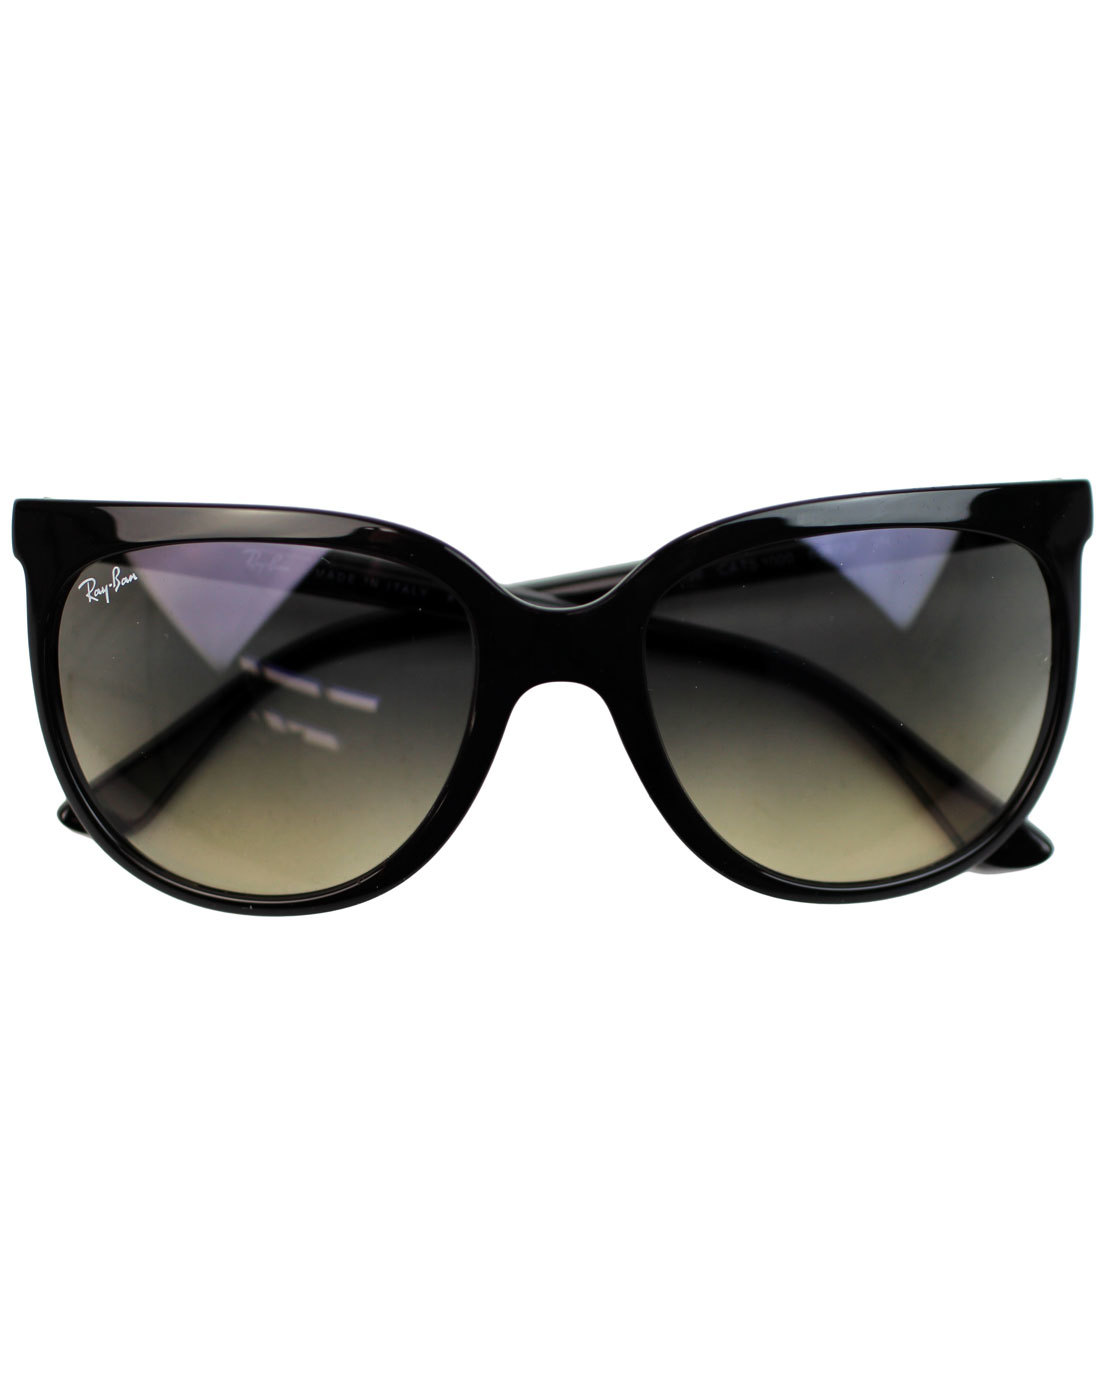 RAYBAN Cats 1000 Retro 70s Wayfarer Sunglasses in Black